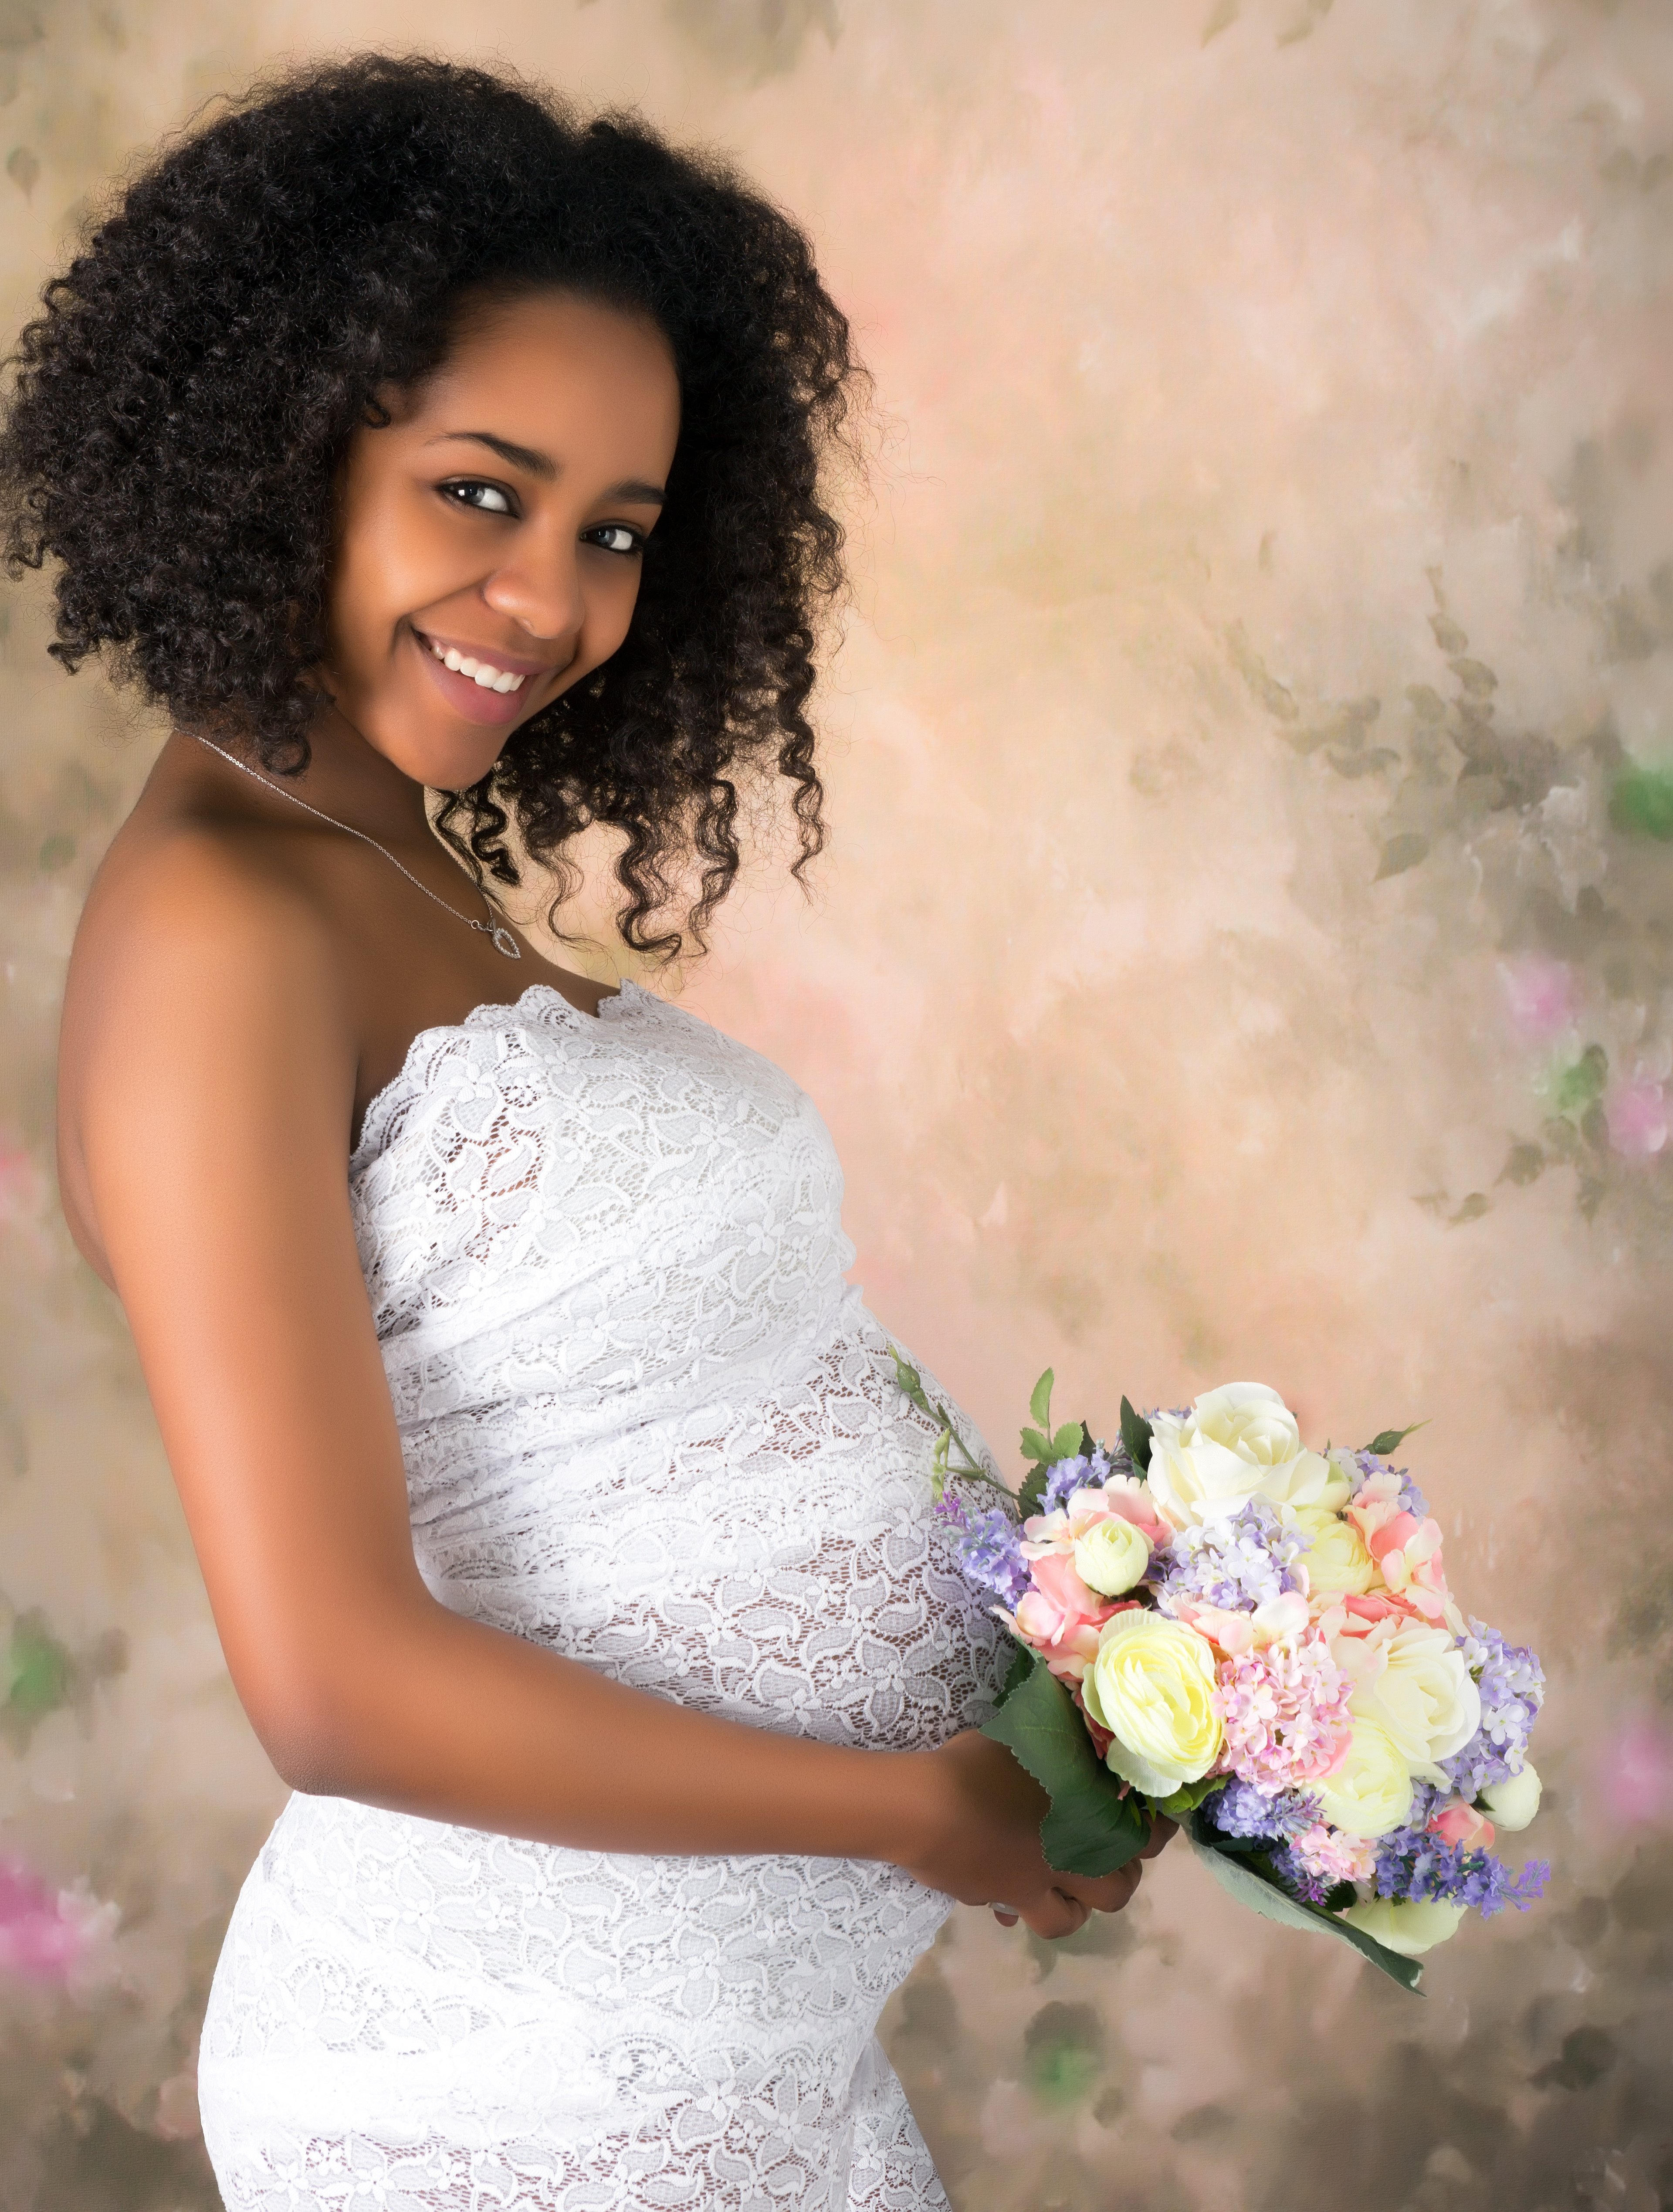 Pregnant woman in wedding dress | Photo: Shutterstock